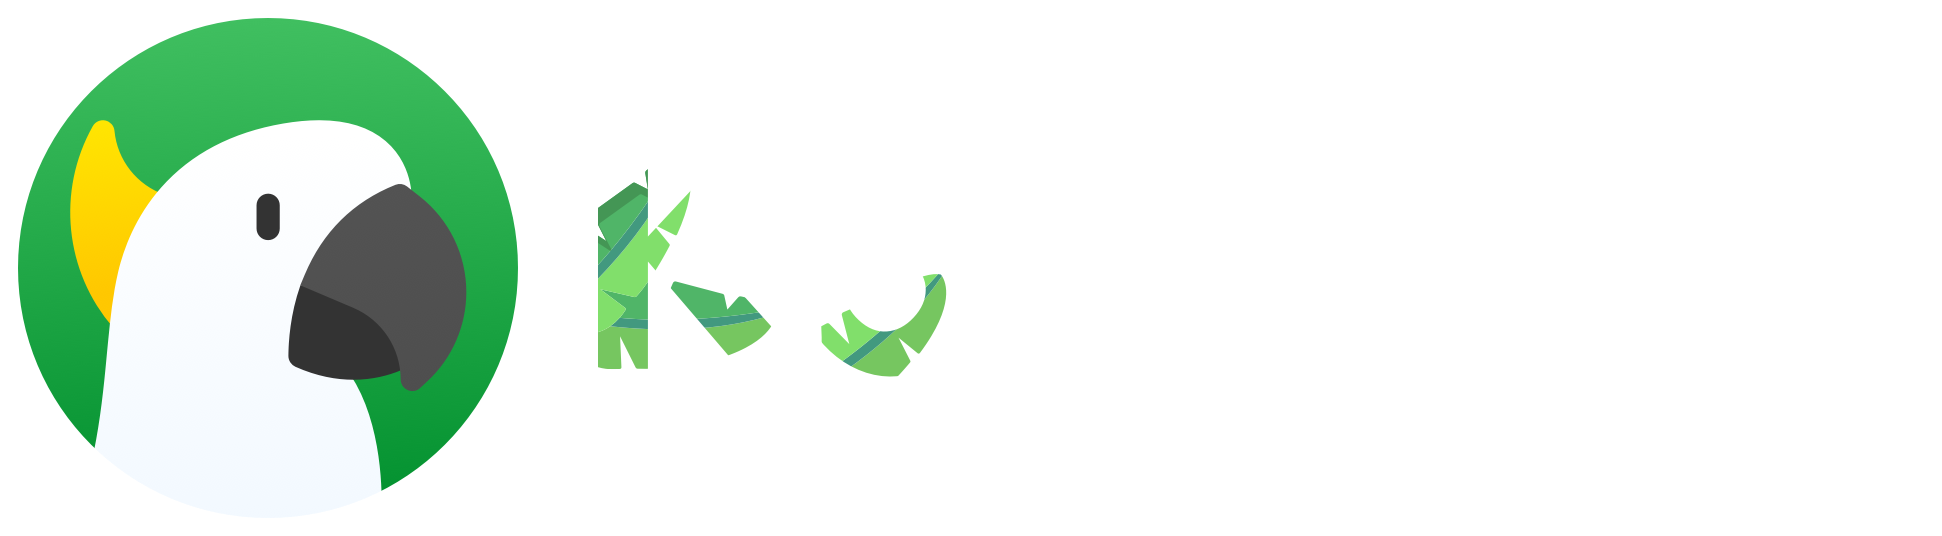 Kokkatoo - Logo